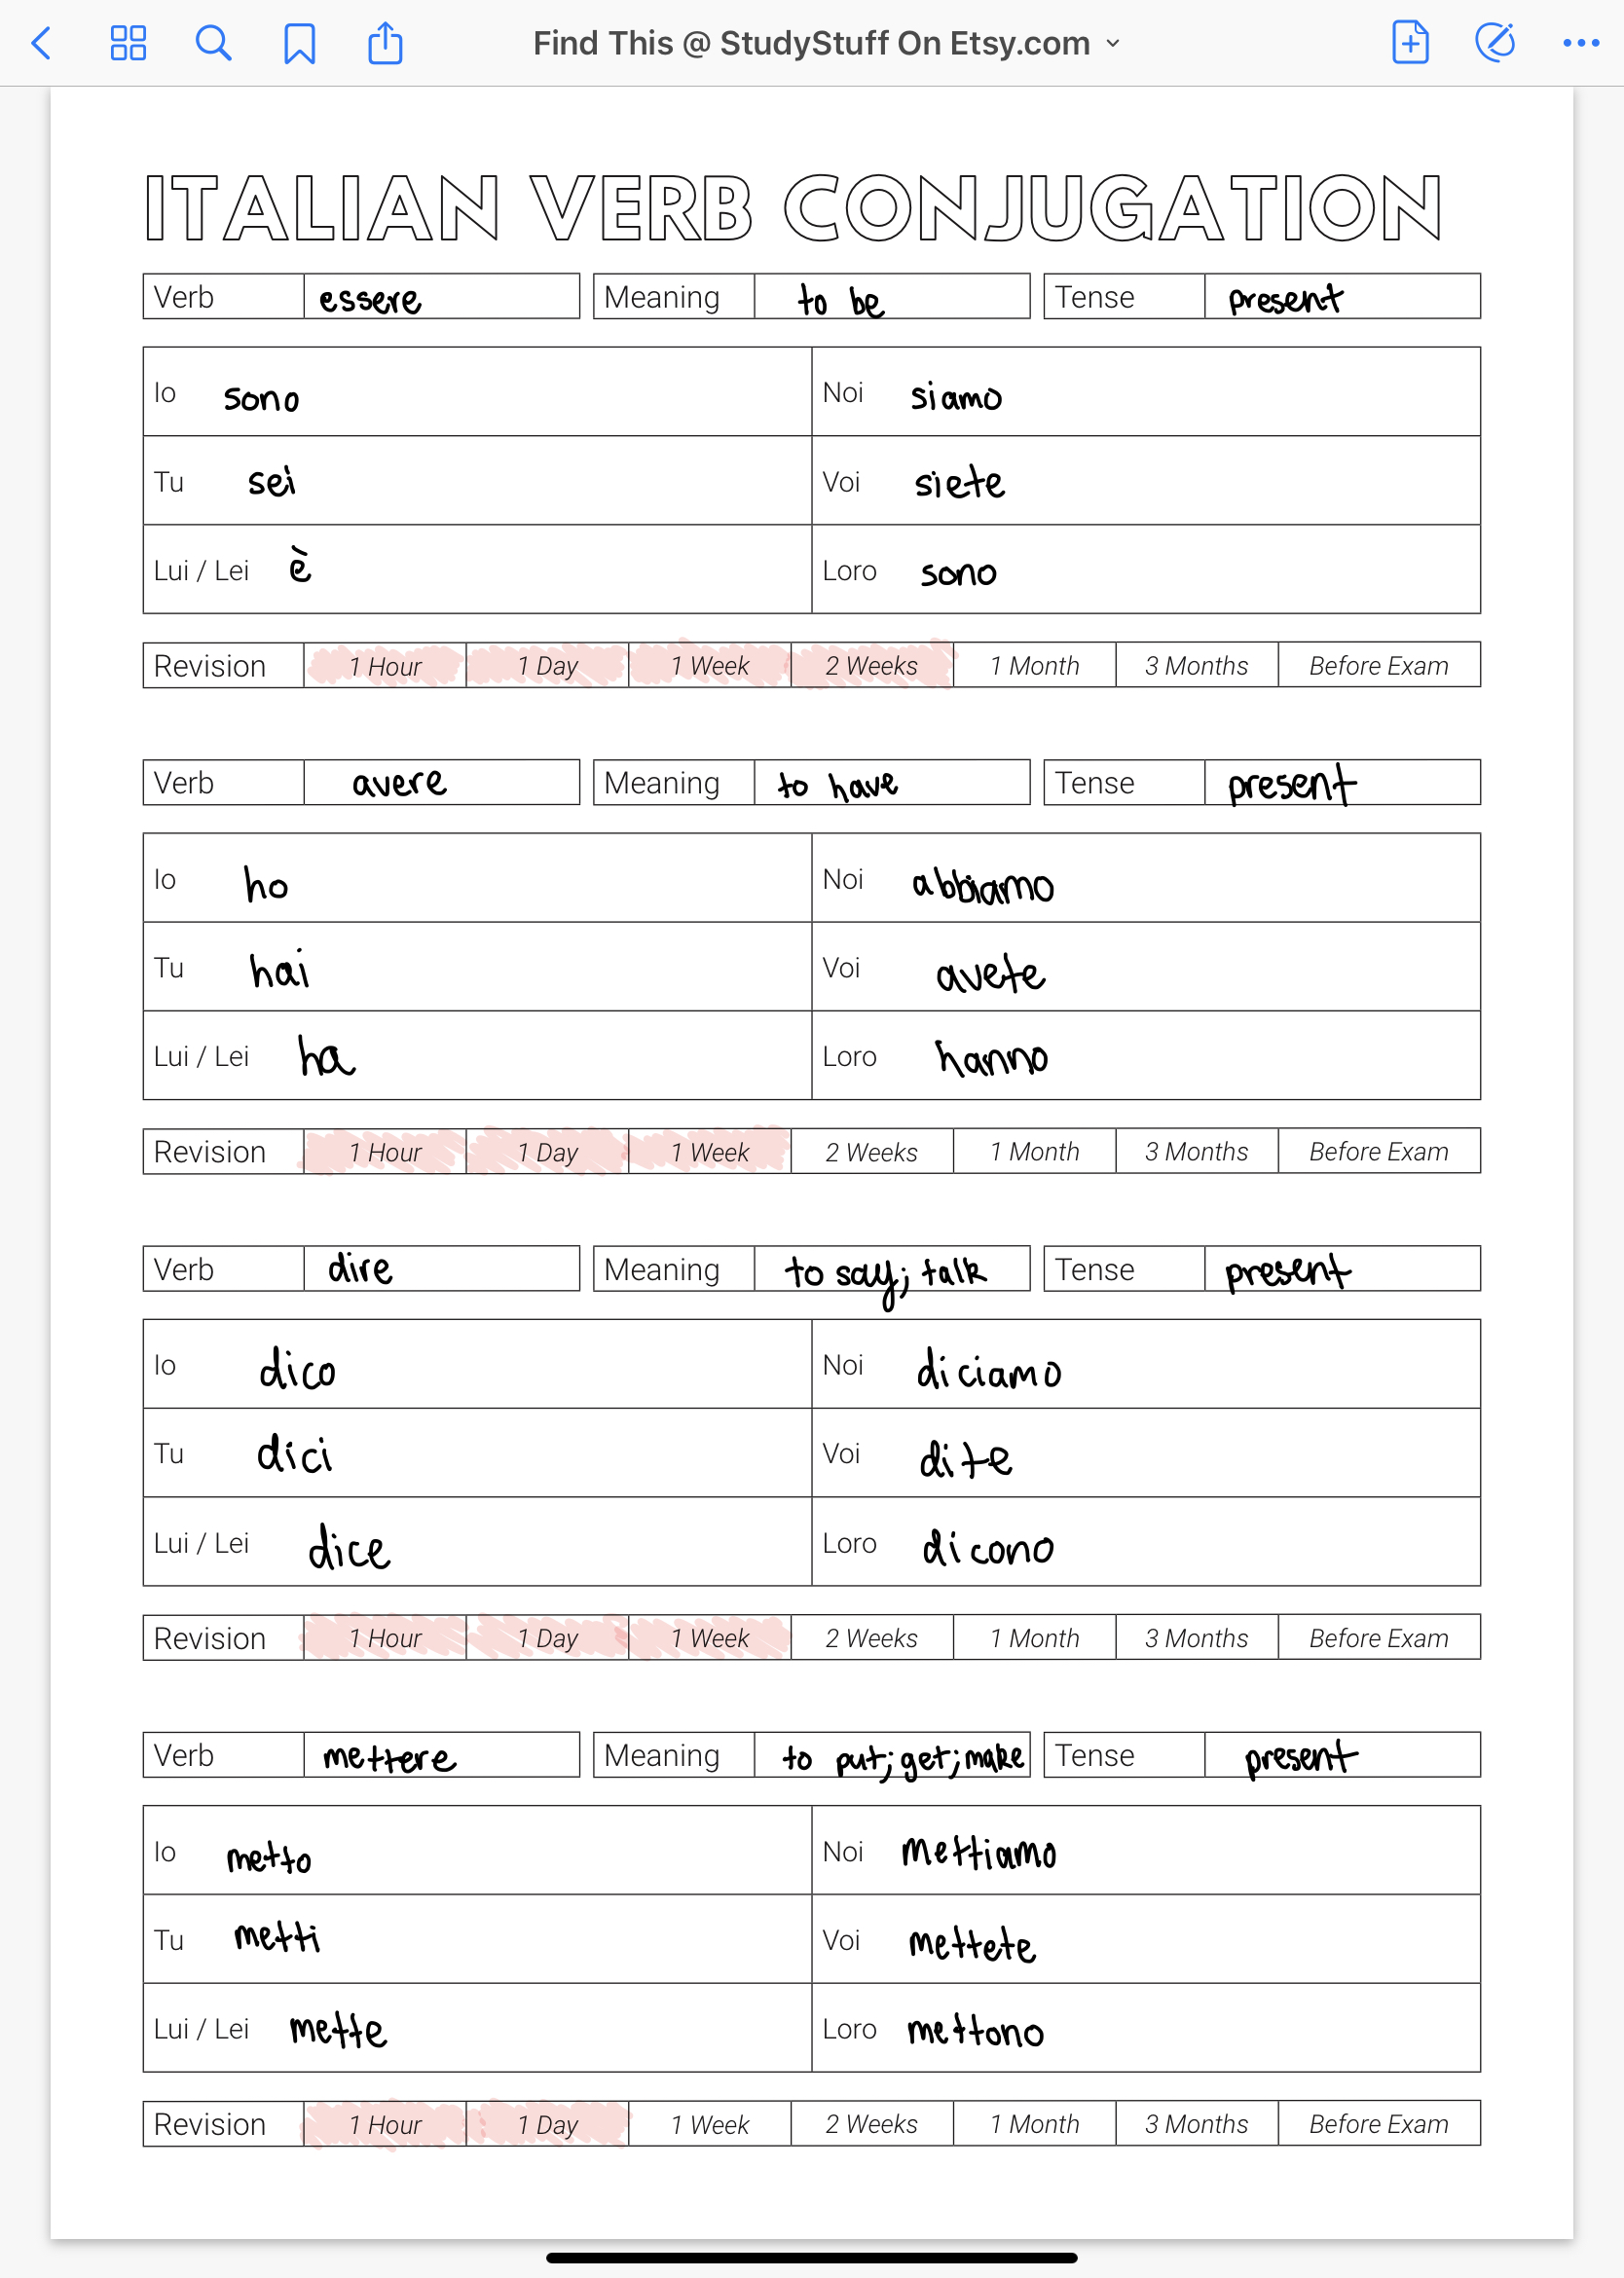 spanish-verb-conjugation-practice-worksheets-db-excel